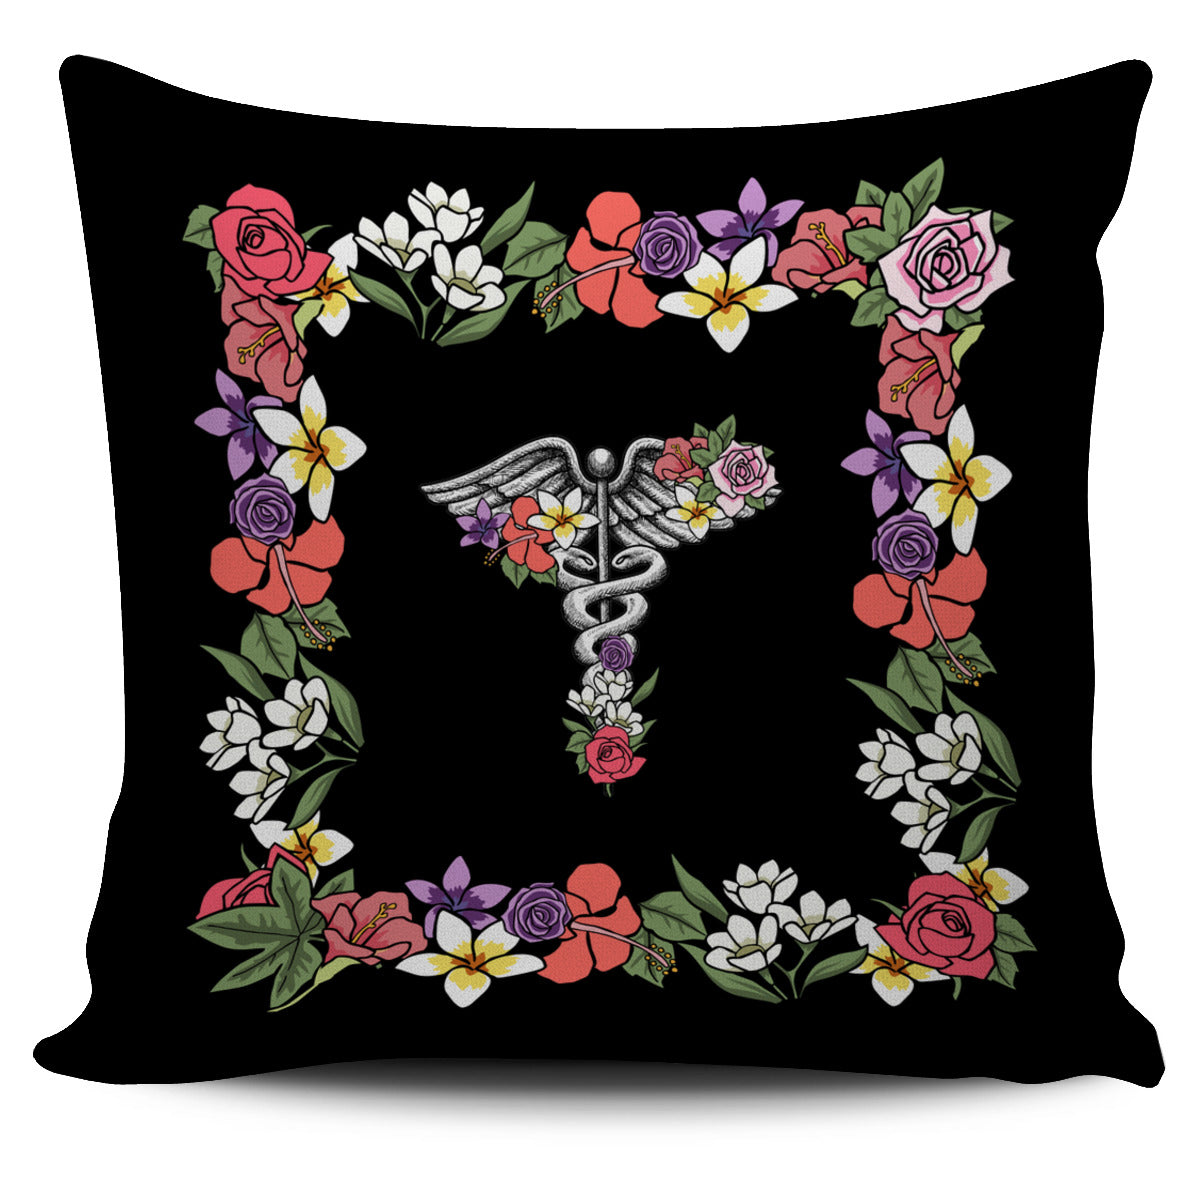 Floral Anatomy Caduceus Pillow Cover